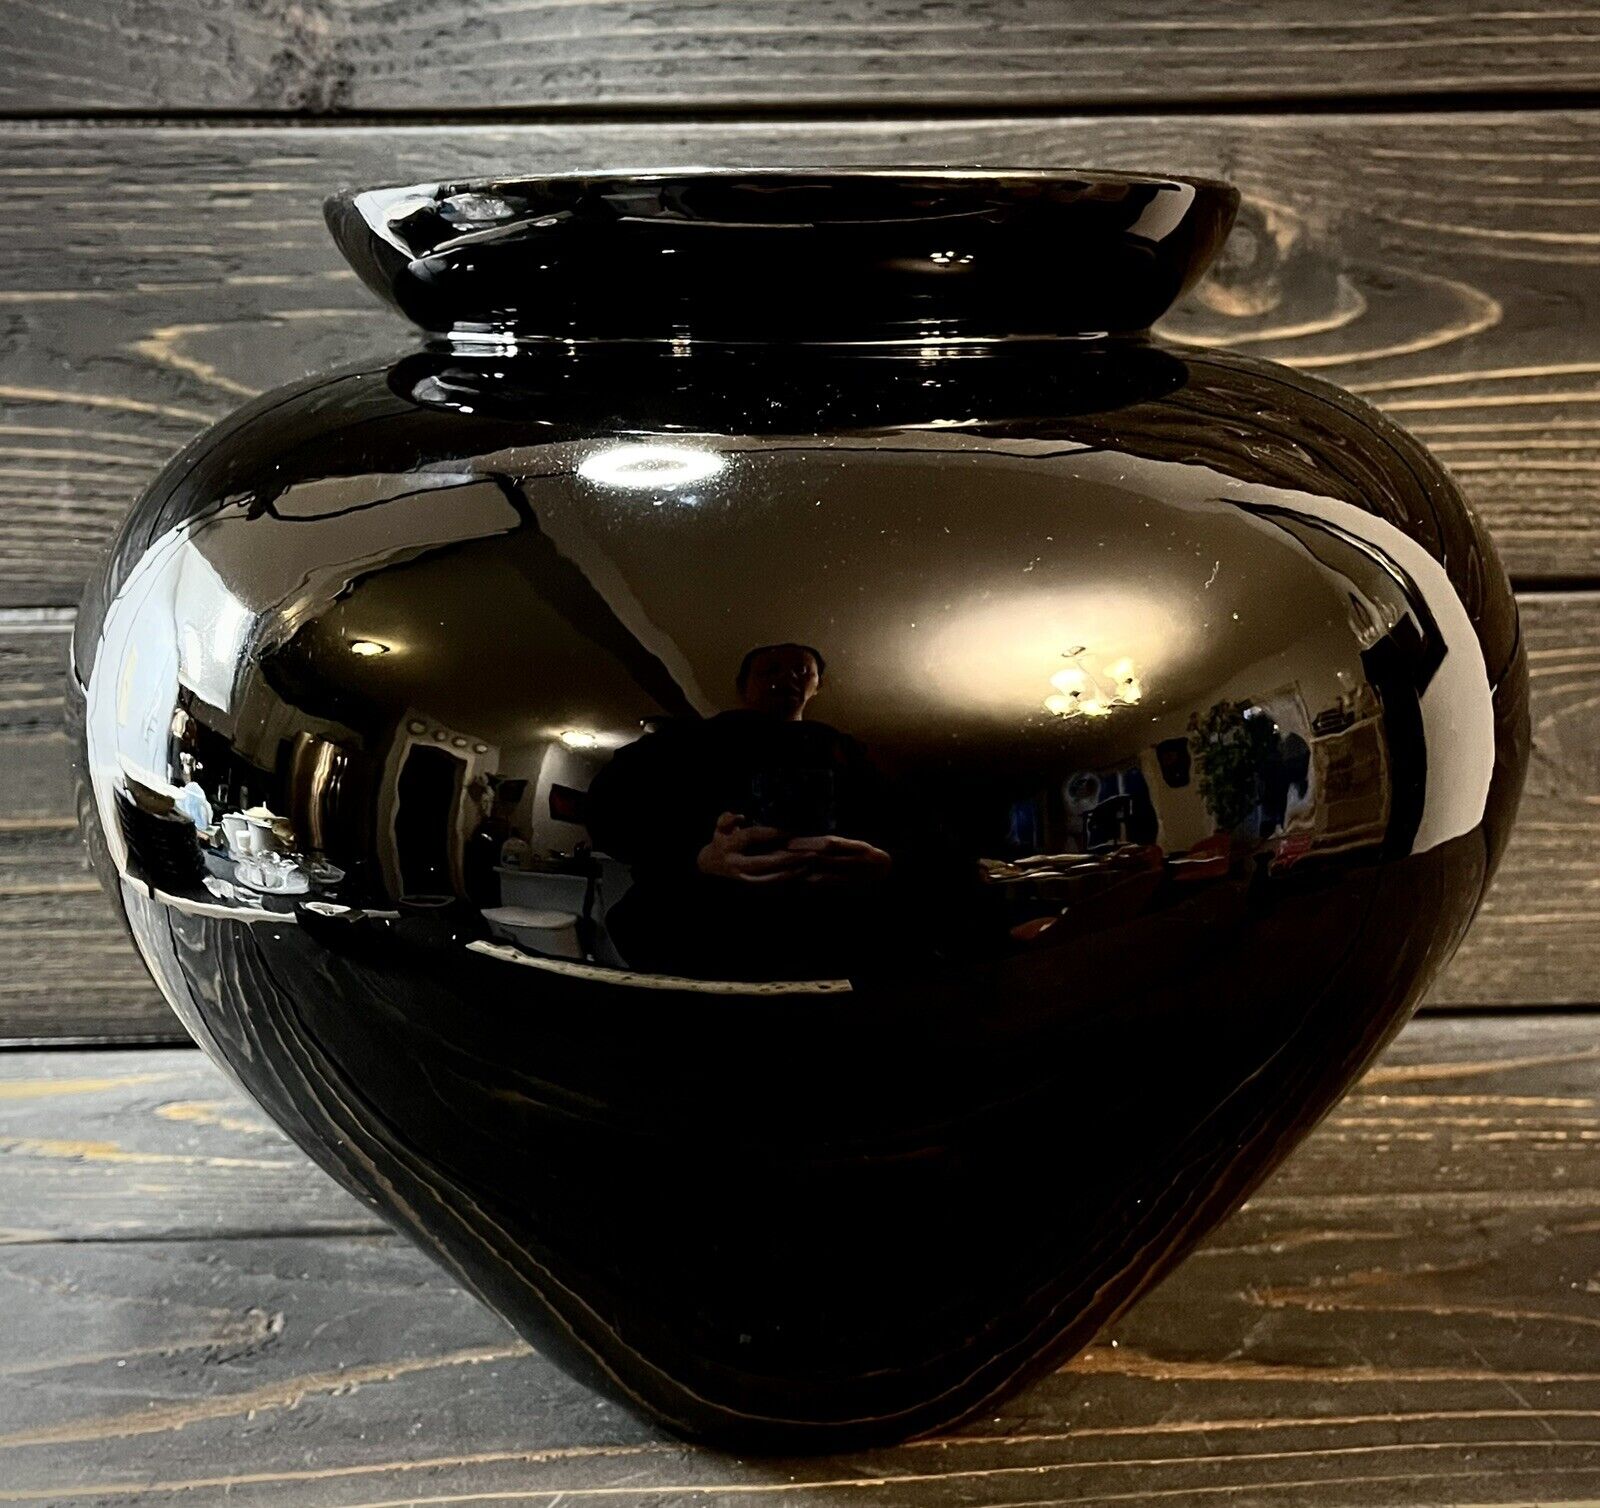 Haeger Large Shiny Black Round Vase 10” Tall Circa 1980’s Art Deco Styled